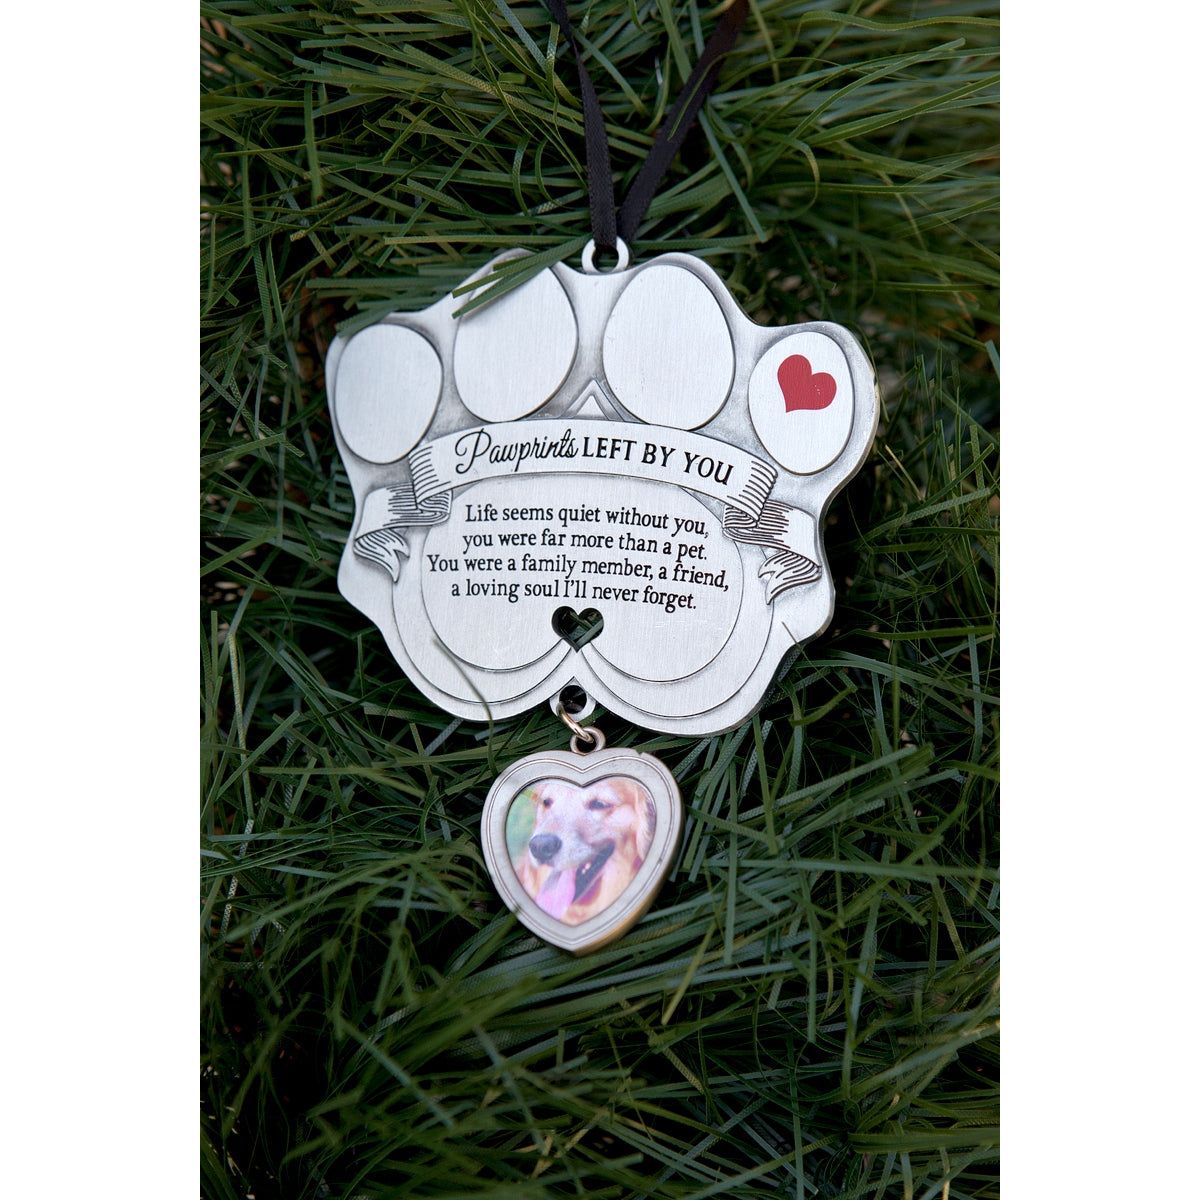 Pawprints Left by You- Pet Photo Memorial Ornament